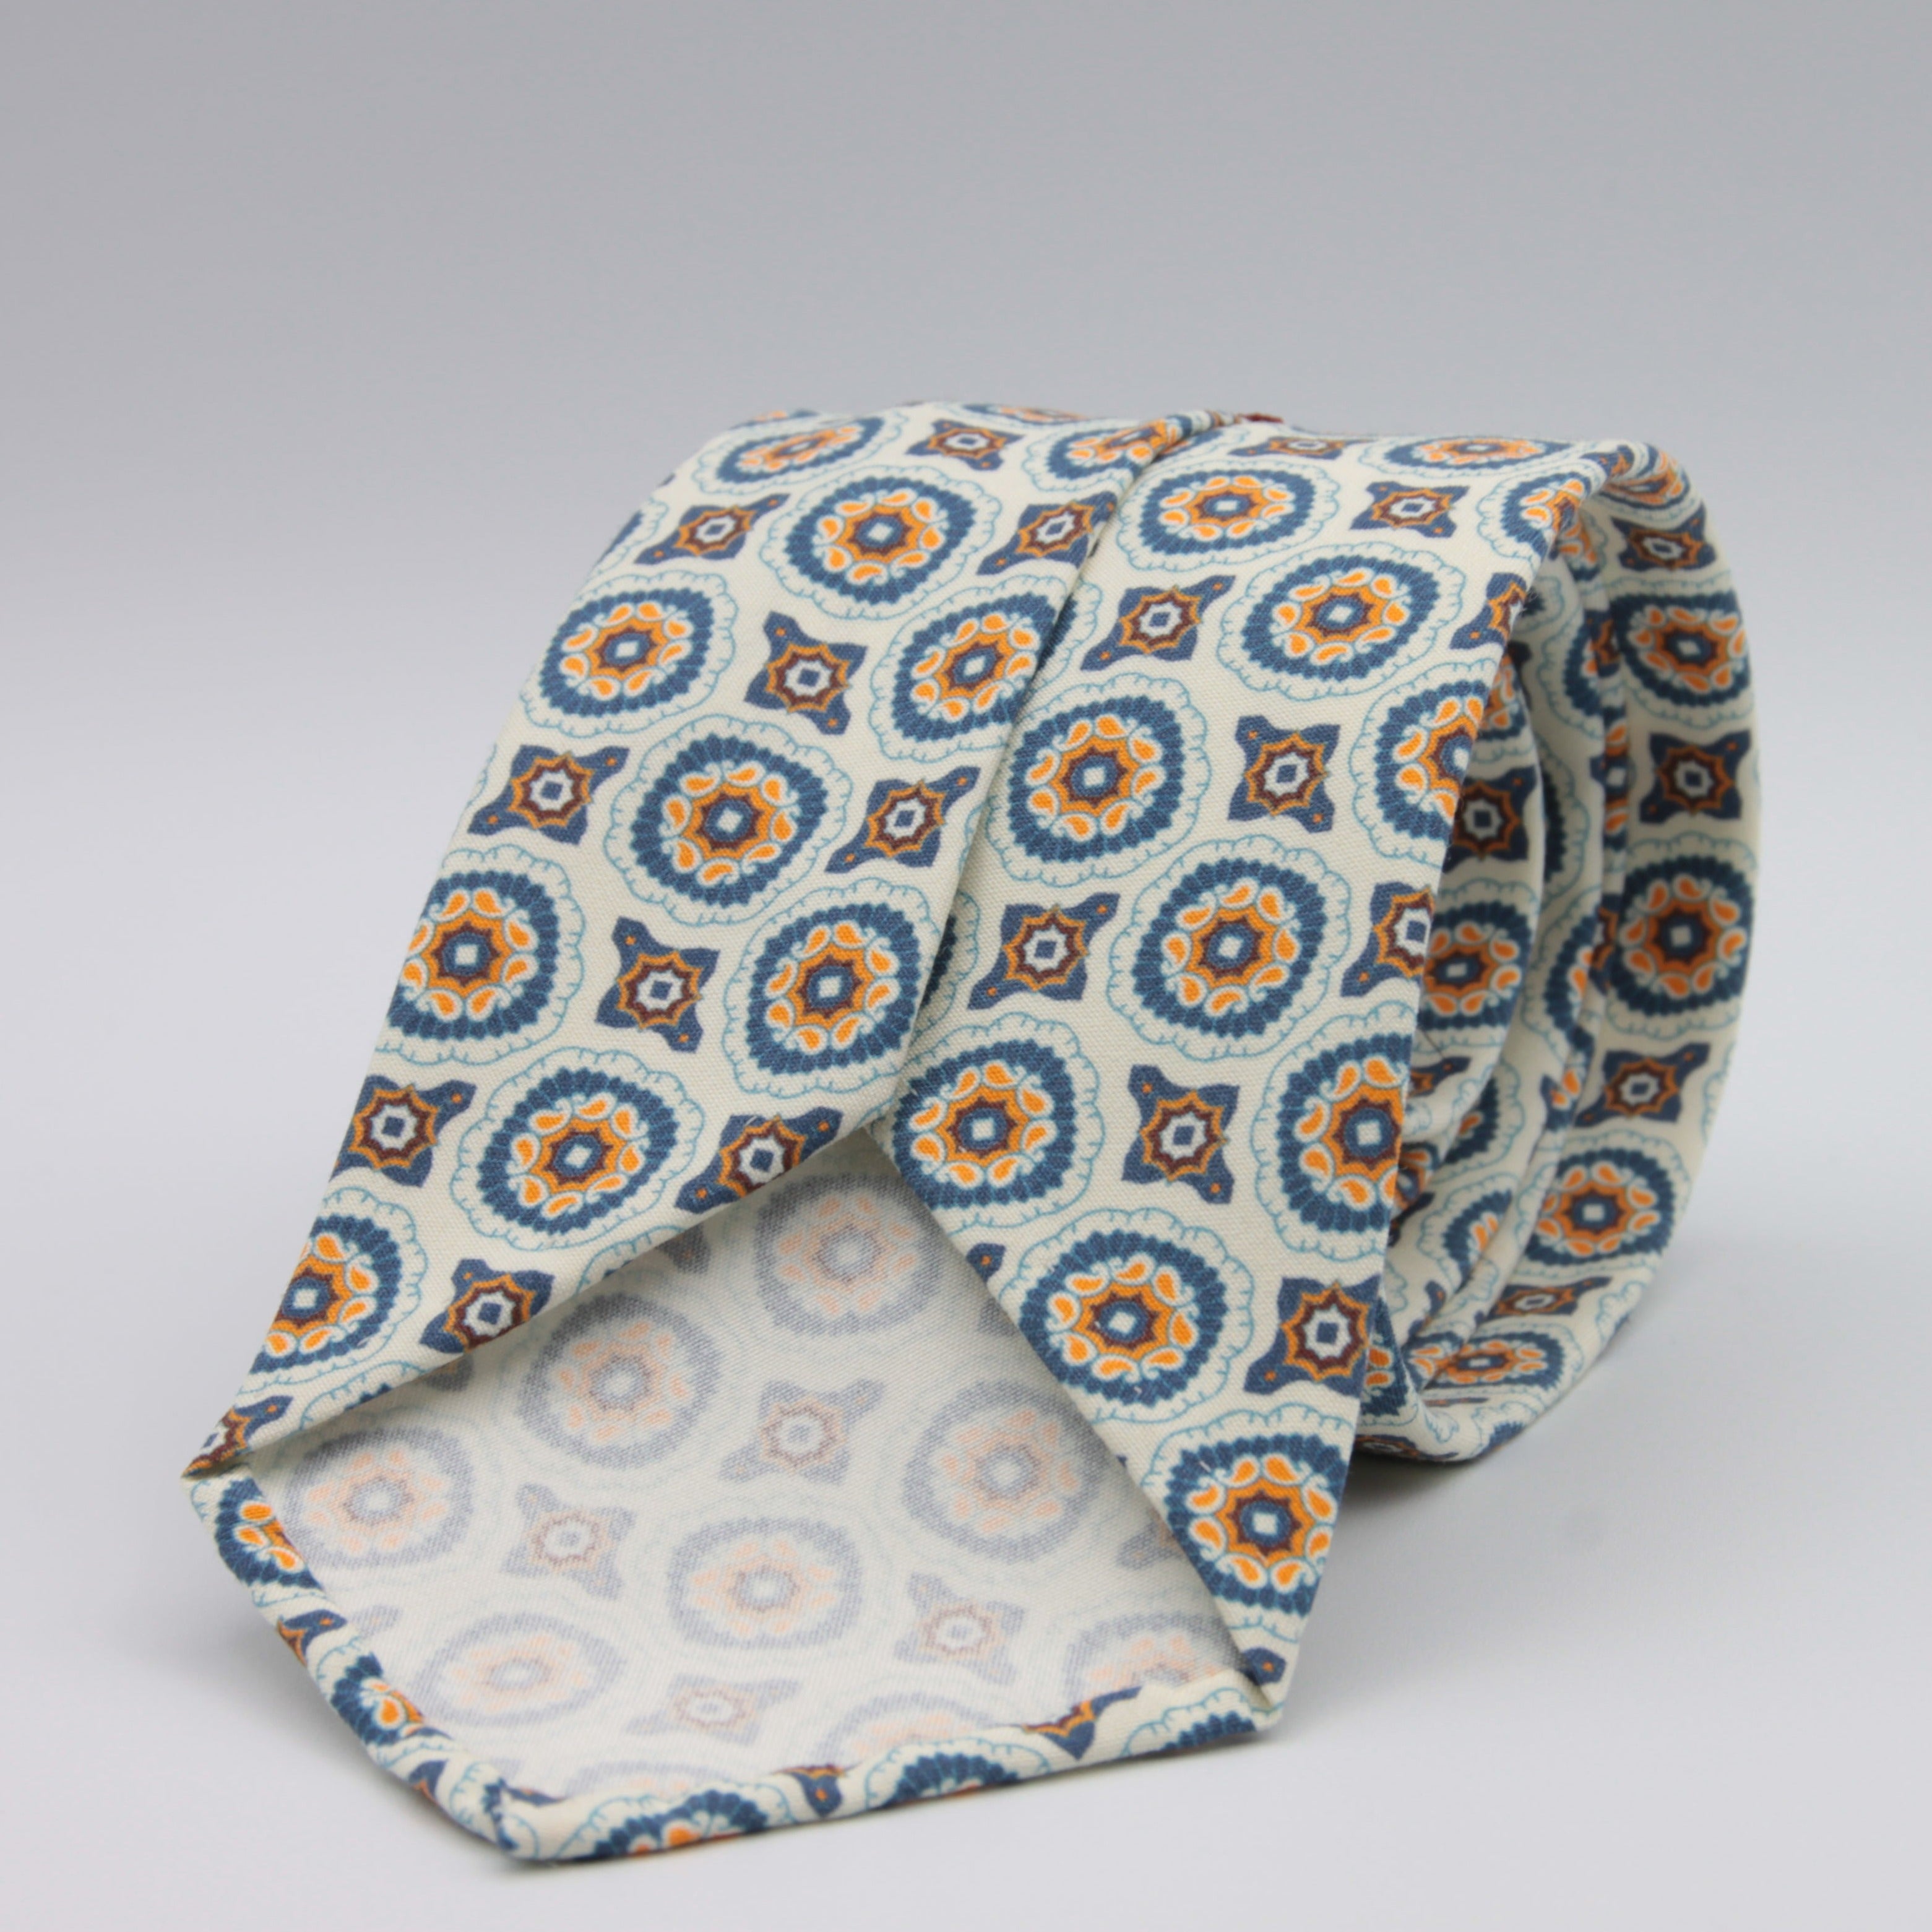 Cruciani & Bella 100% Printed Madder Silk  Italian fabric Unlined tie Off White, Blue, Orange and Brown Motifs Tie Handmade in Italy 8 cm x 150 cm #7624